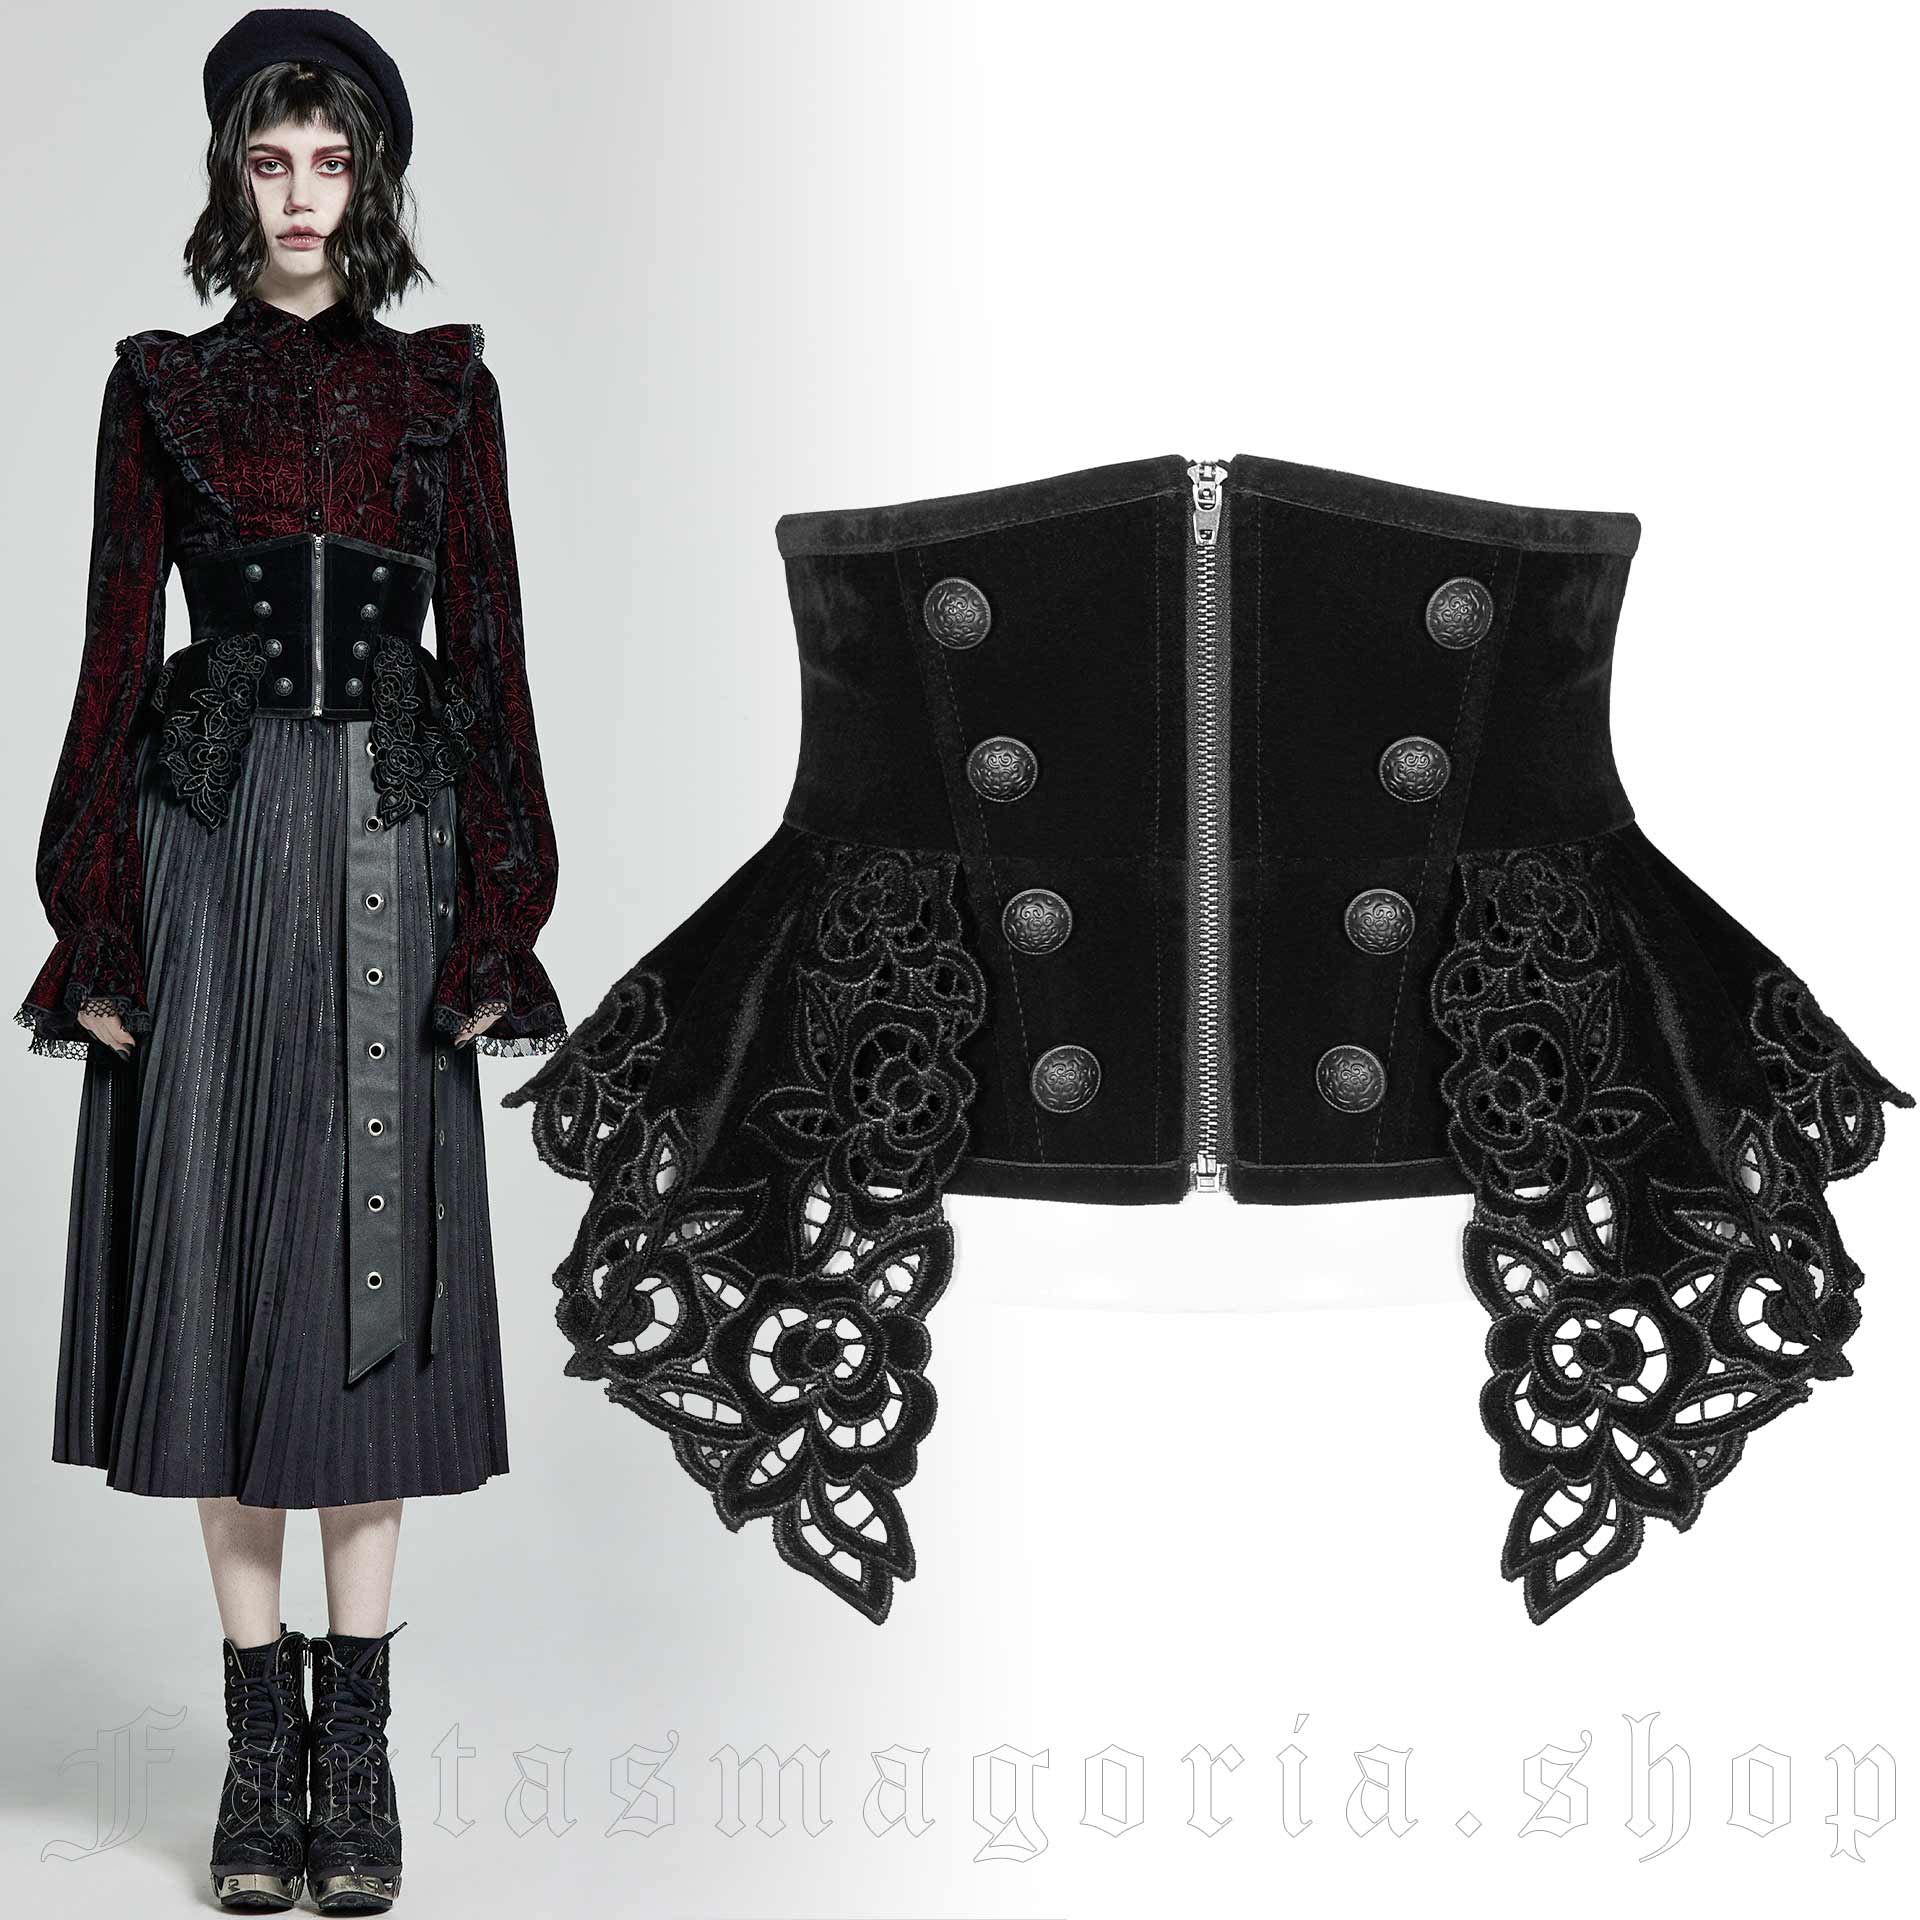 Women's Black Corset Victorian Gothic, Romantic Gothic